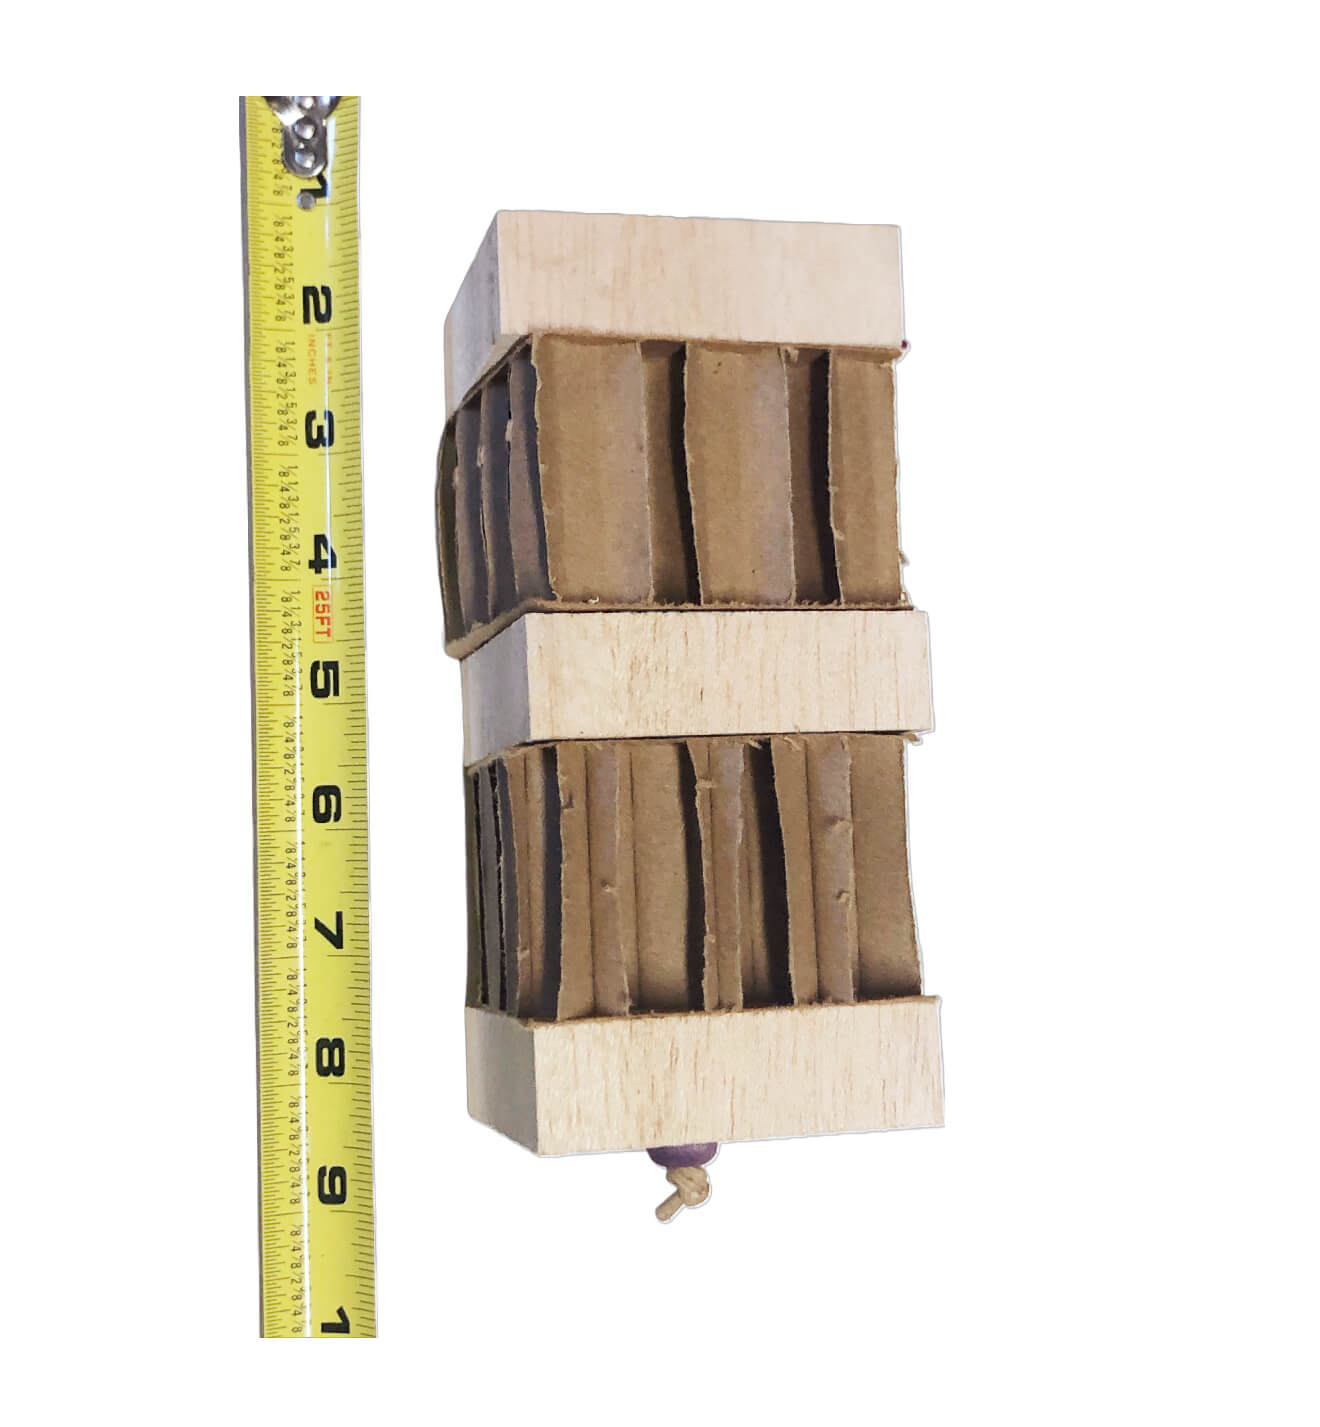 Natural balsa box with cardboard blocks